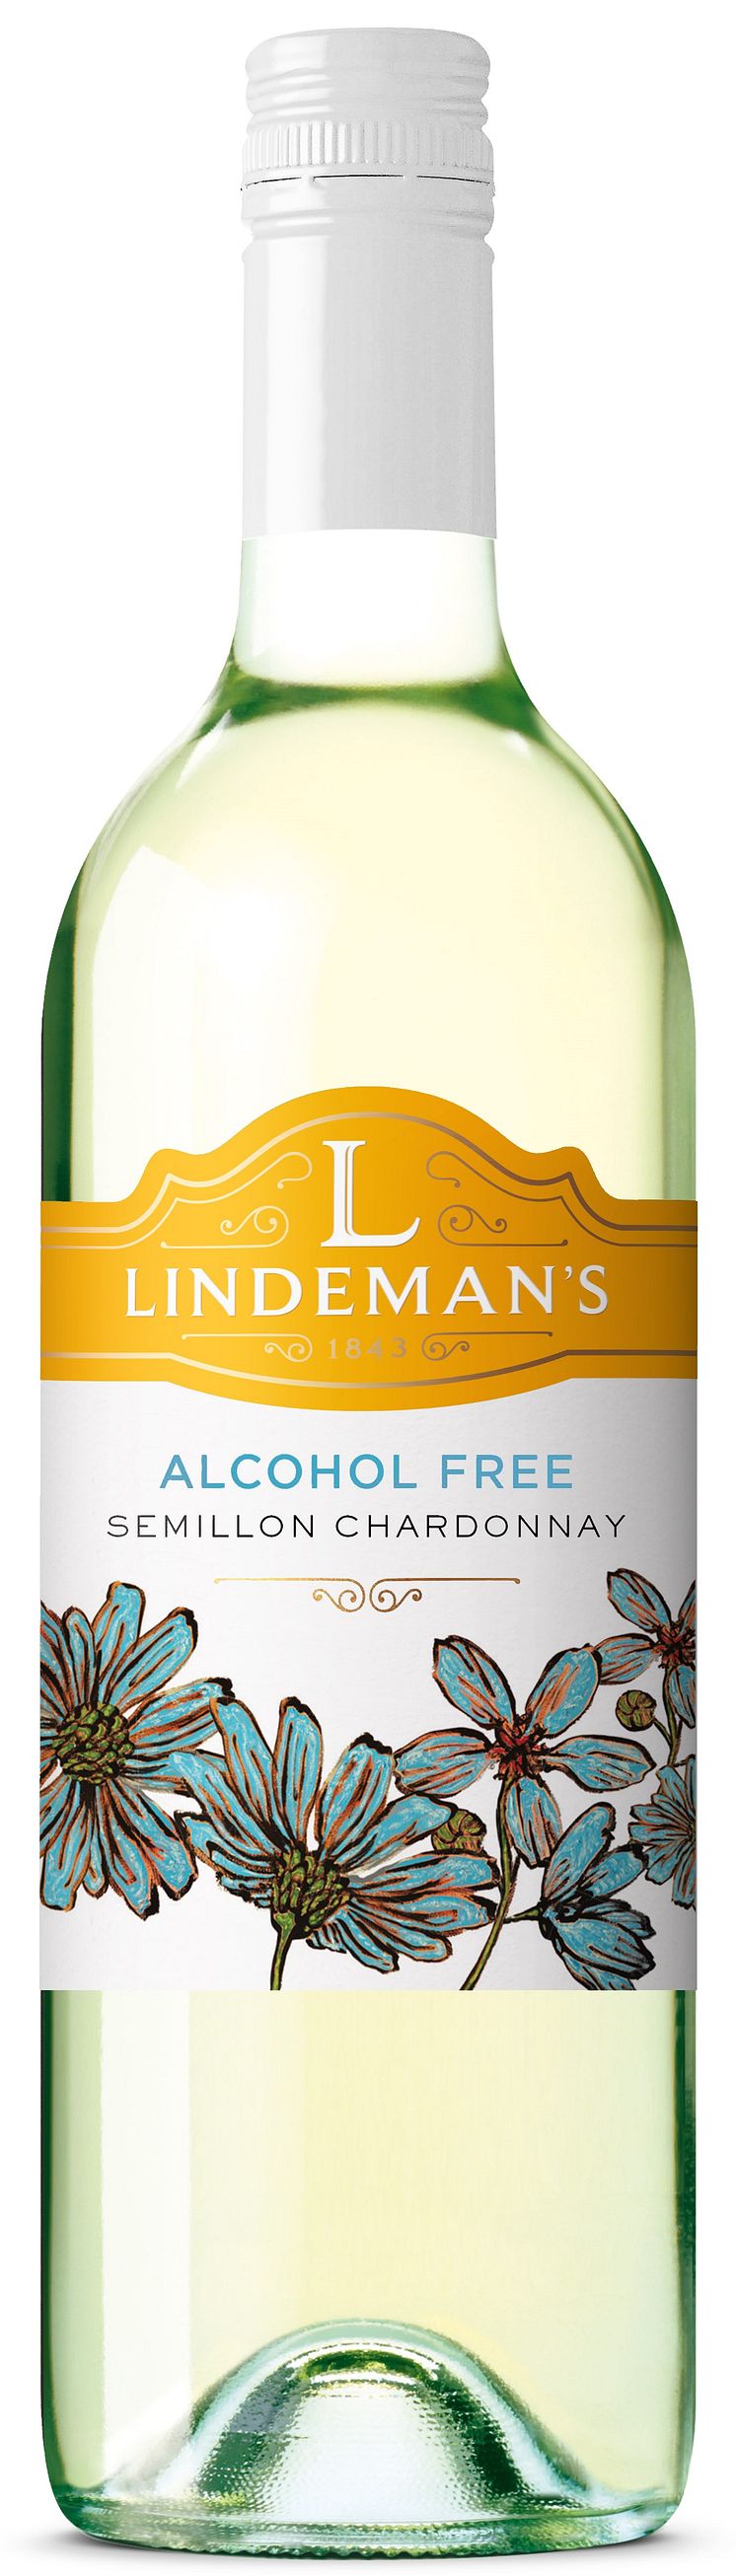 Lindeman's Alcohol Free Sem Chard